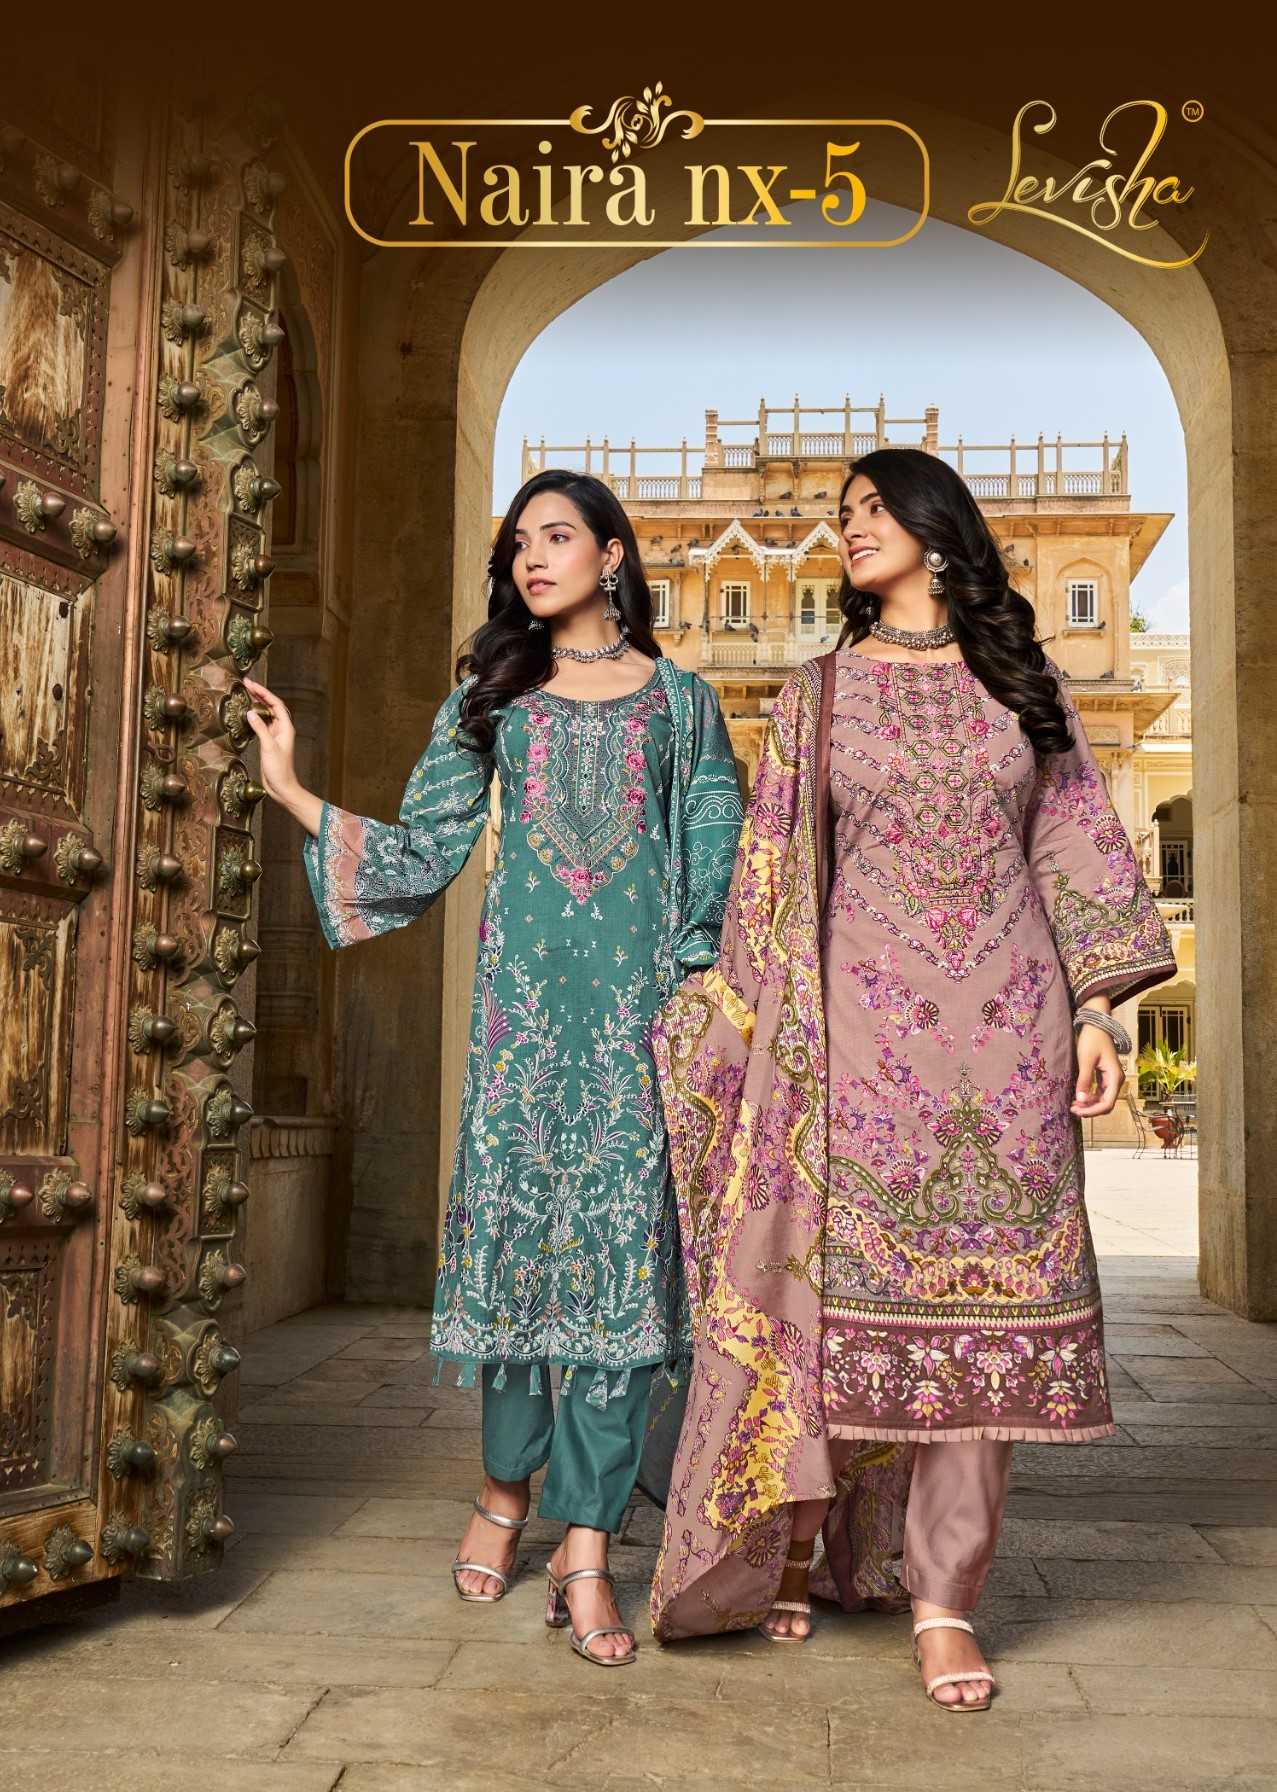 levisha naira nx vol 5 gorgeous look camric cotton pakistani style salwar kameez